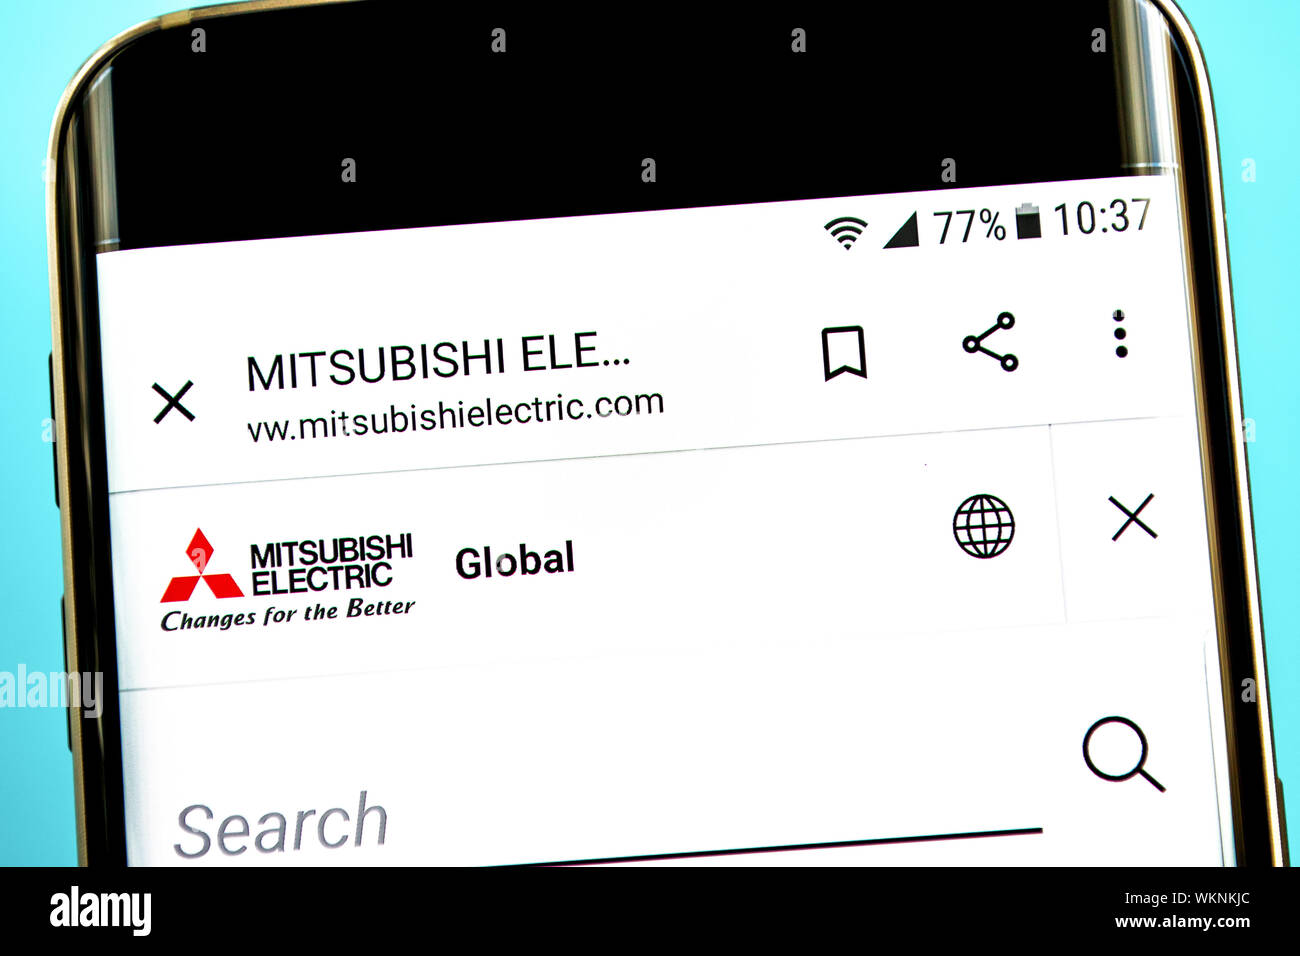 Berdyansk, Ukraine - August 1, 2019: Illustrative Editorial, Mitsubishi Electric website homepage. Mitsubishi Electric logo visible on the phone scree Stock Photo